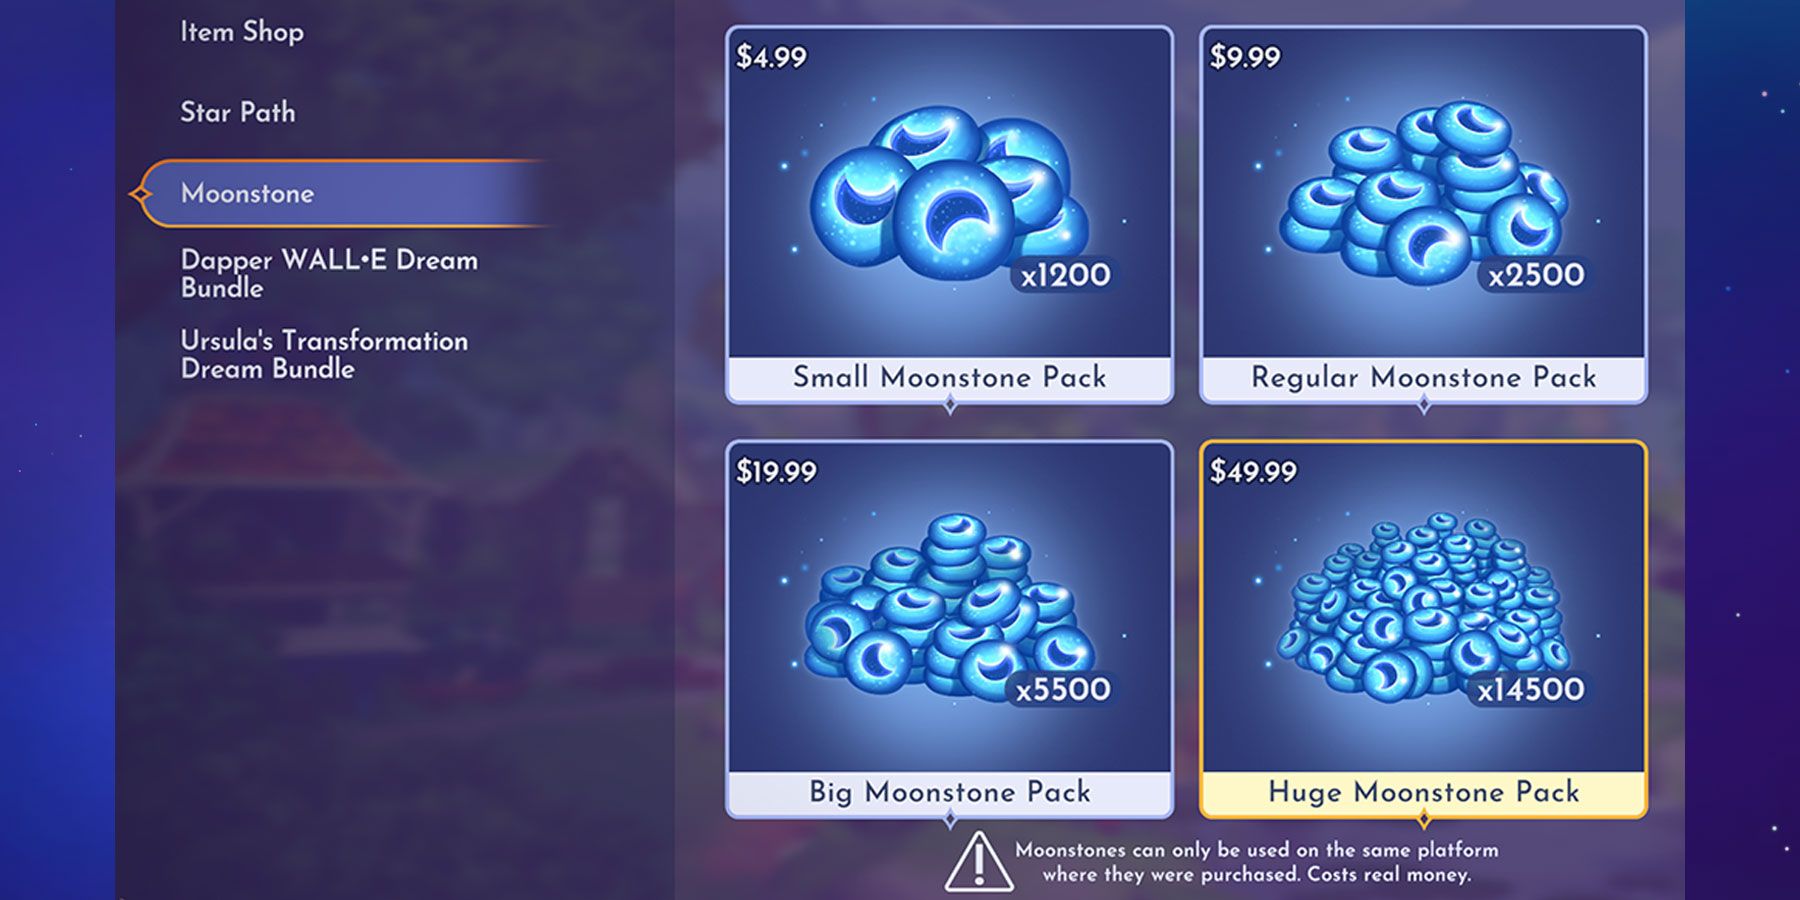 Moonstone prices in Disney Dreamlight Valley.